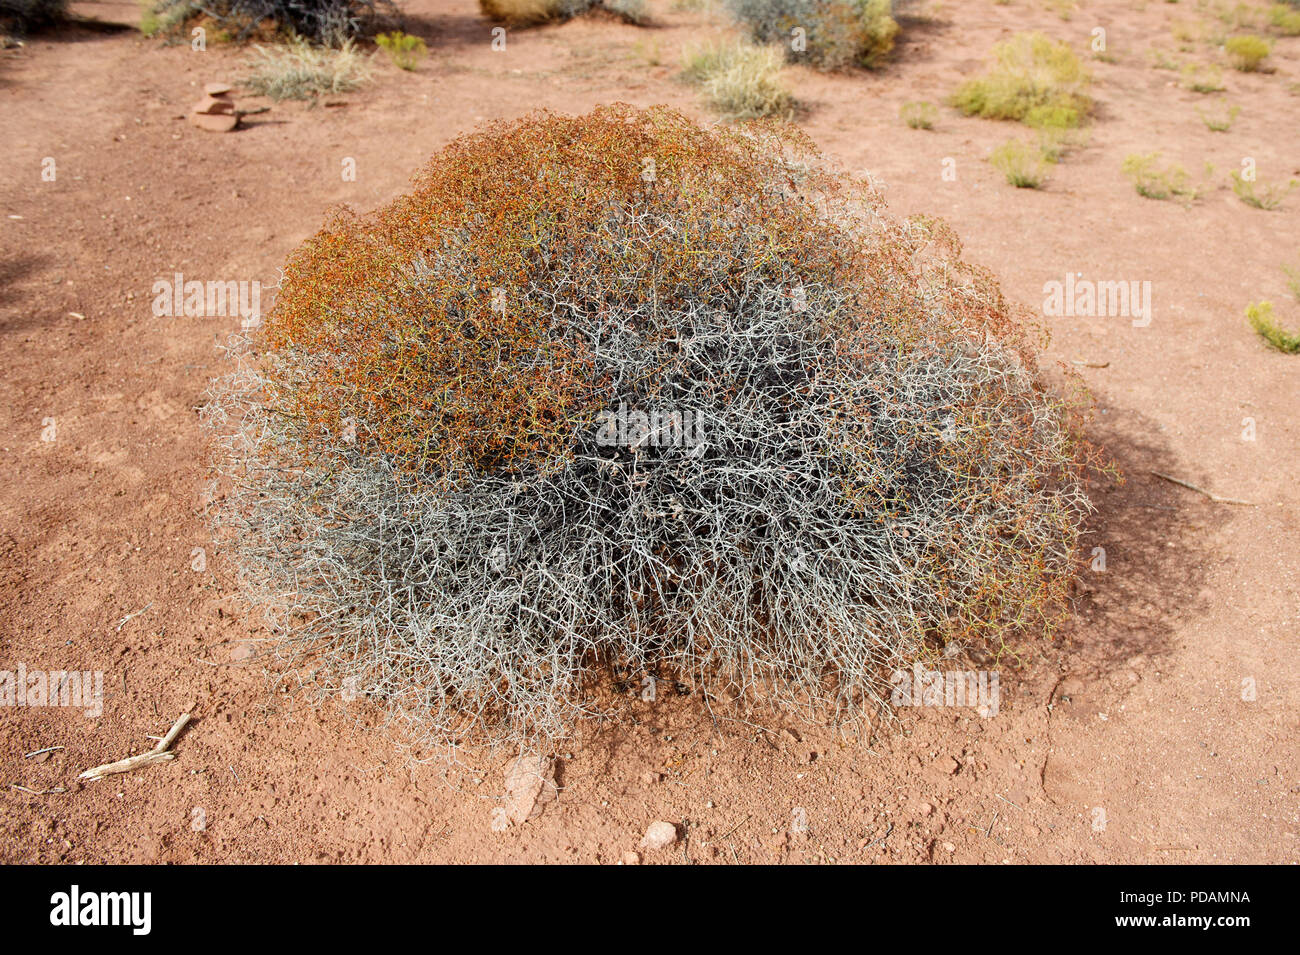 Russian thistle bush in desertic environment, Utah, USA. Stock Photo